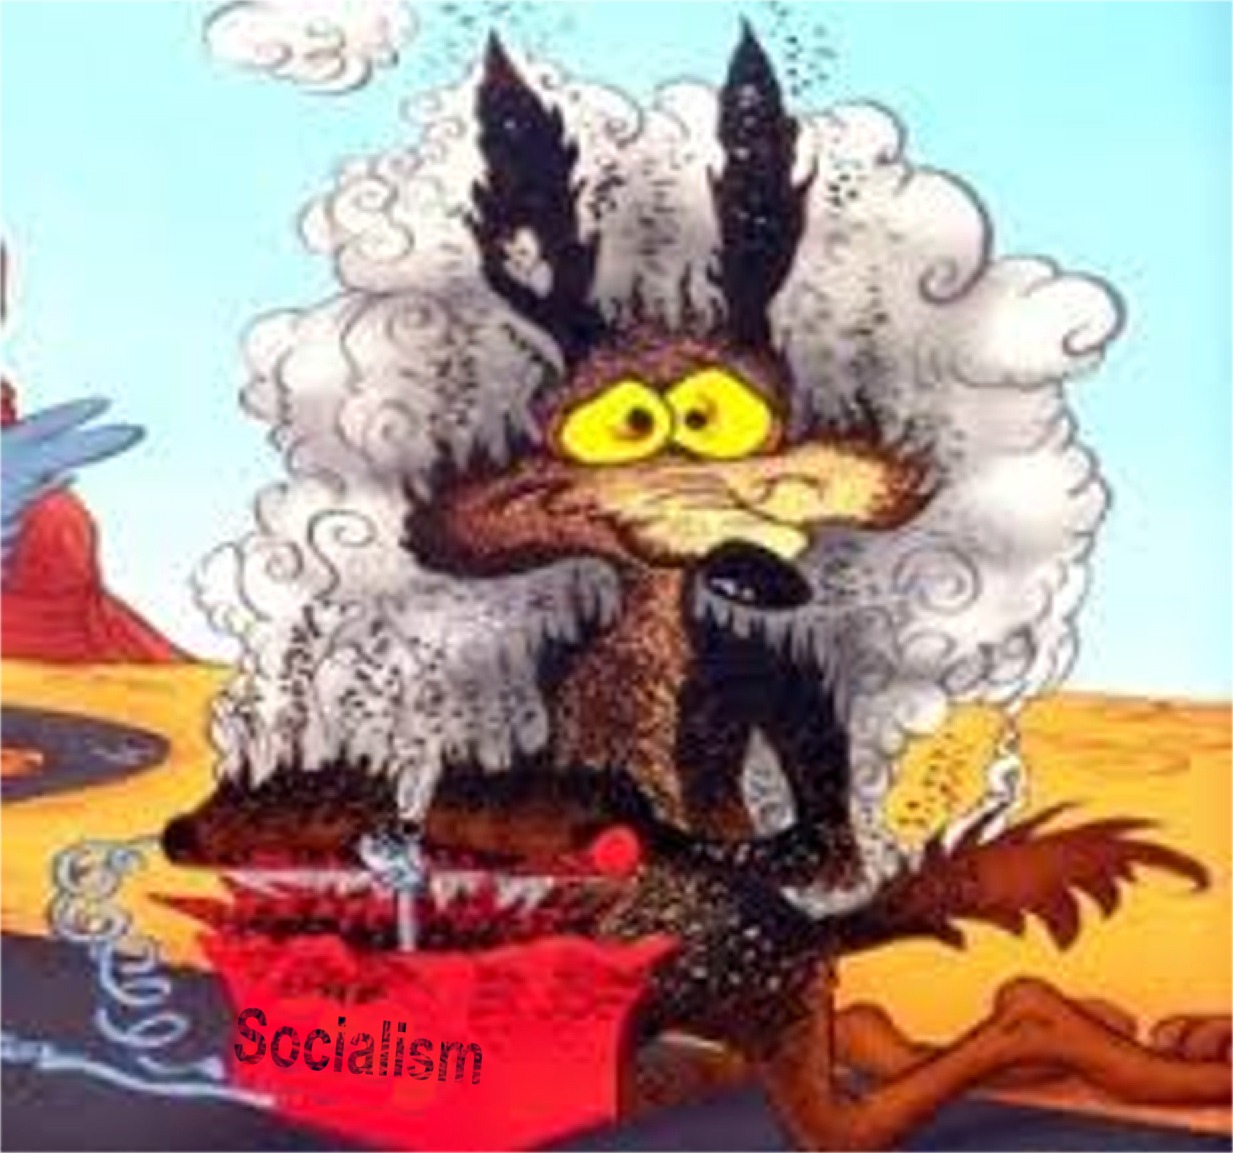 wile e coyote tnt - 3 Socialism